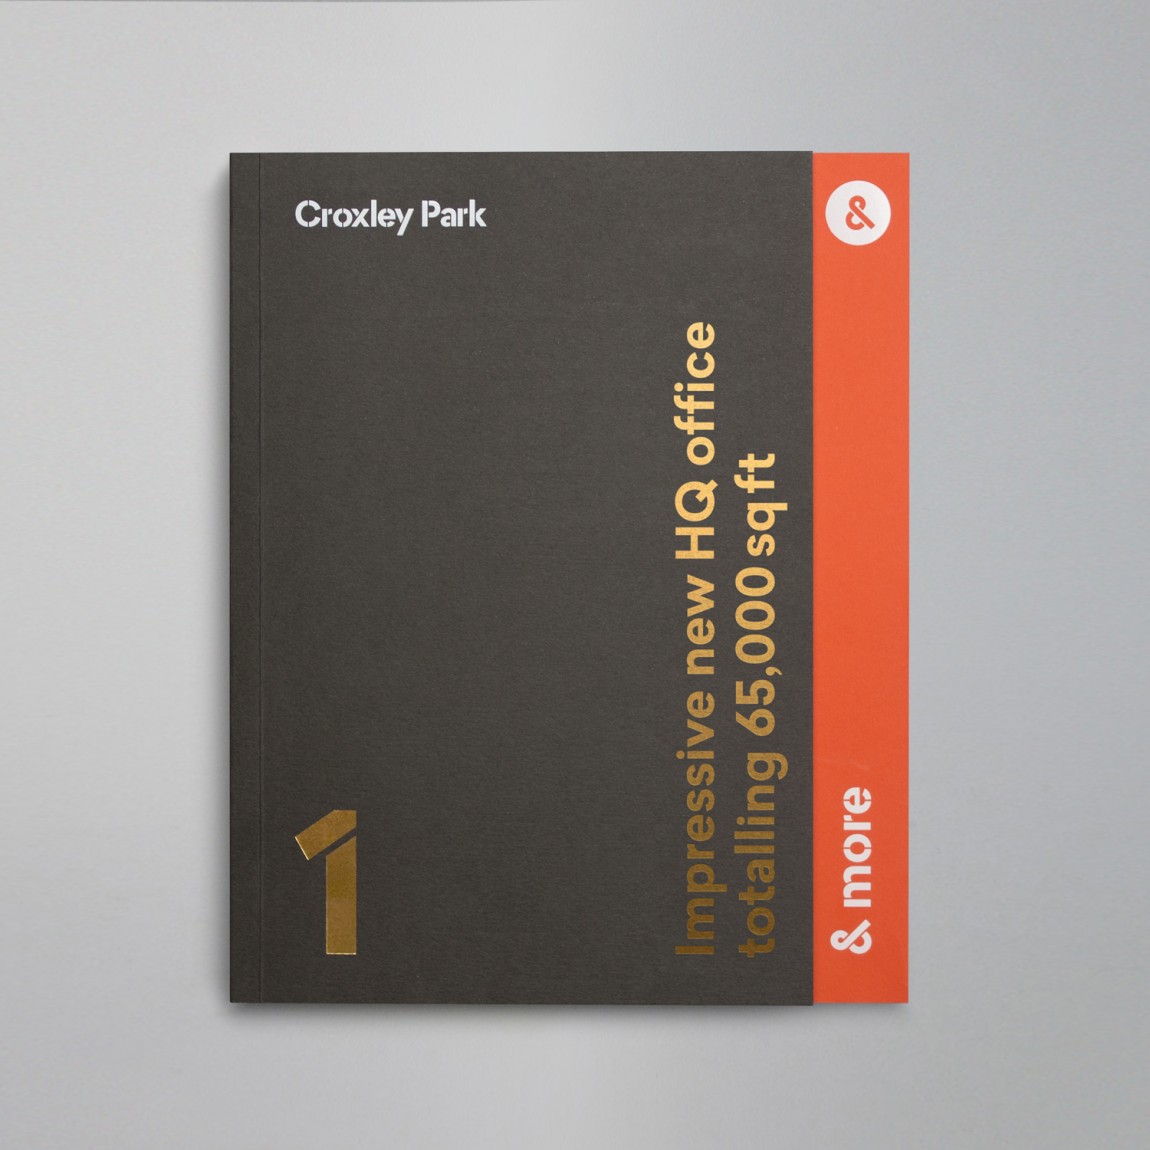 Croxley Park商业公园品牌形象设计 画册设计